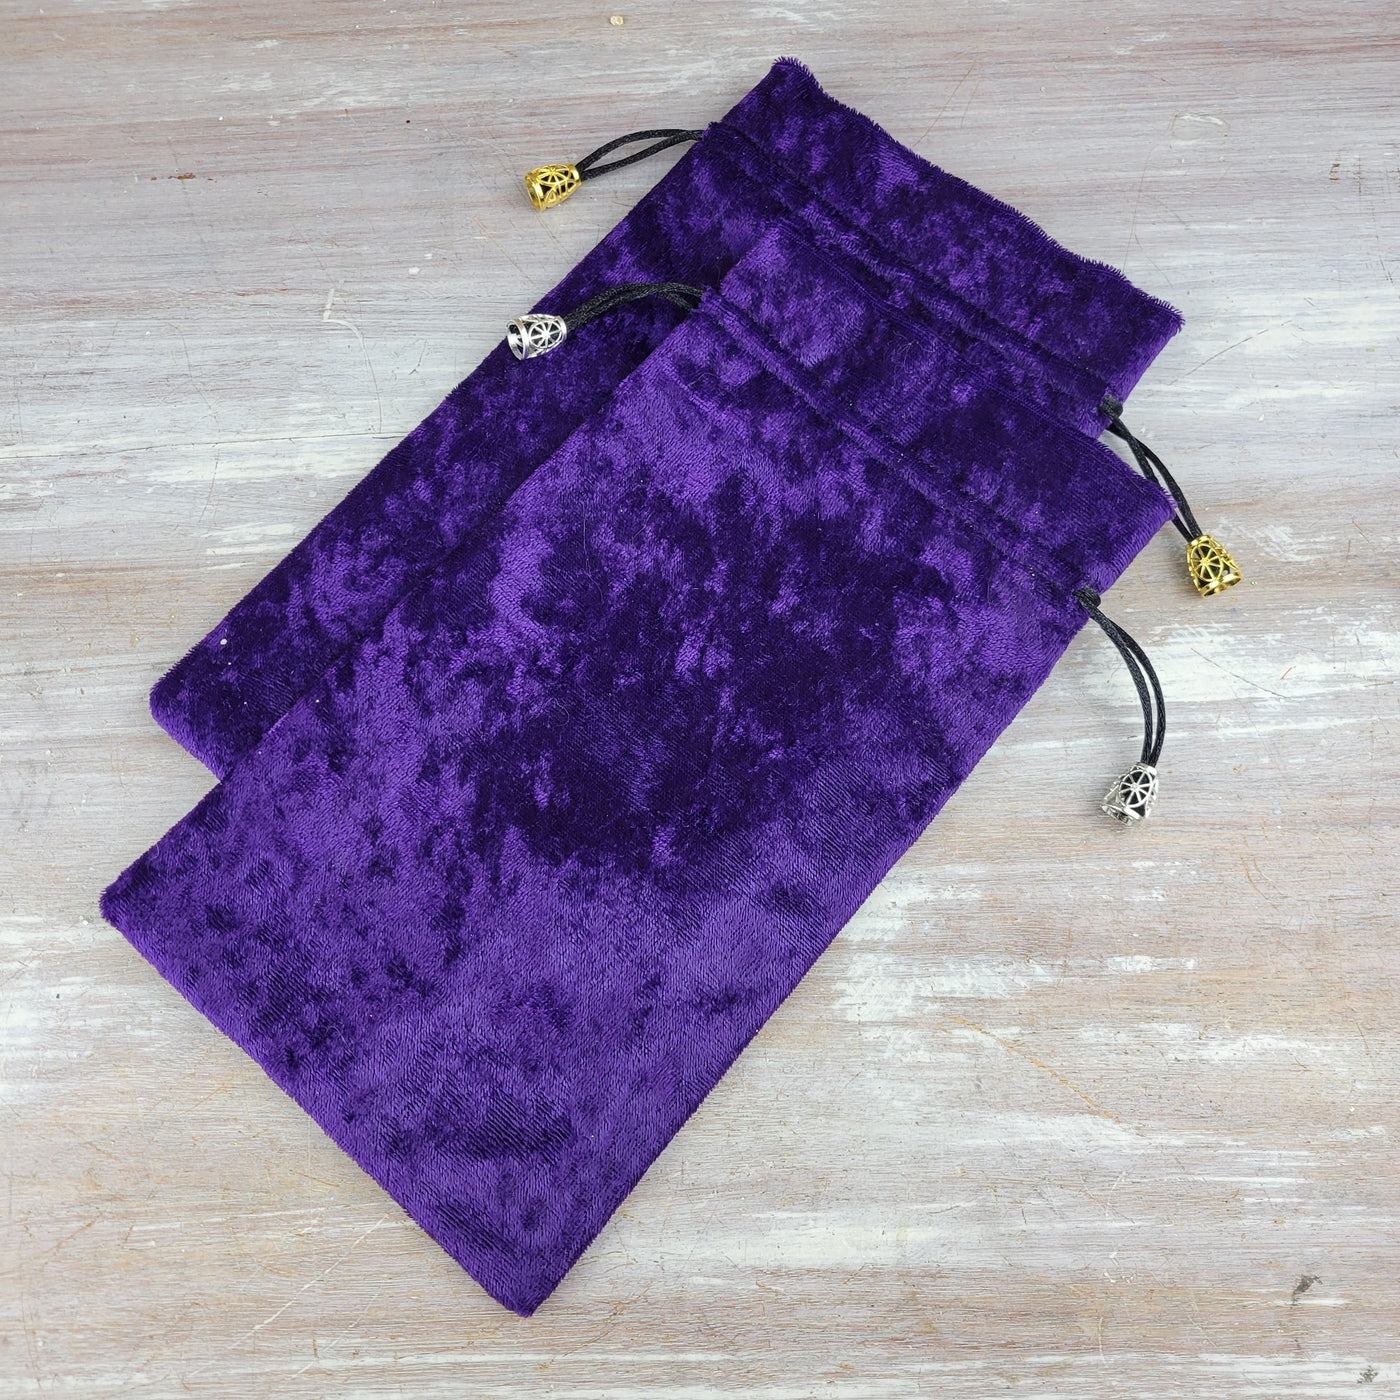 Deep Purple Panne Velvet Tarot Card Bag with Silver Accents - Artisan Made